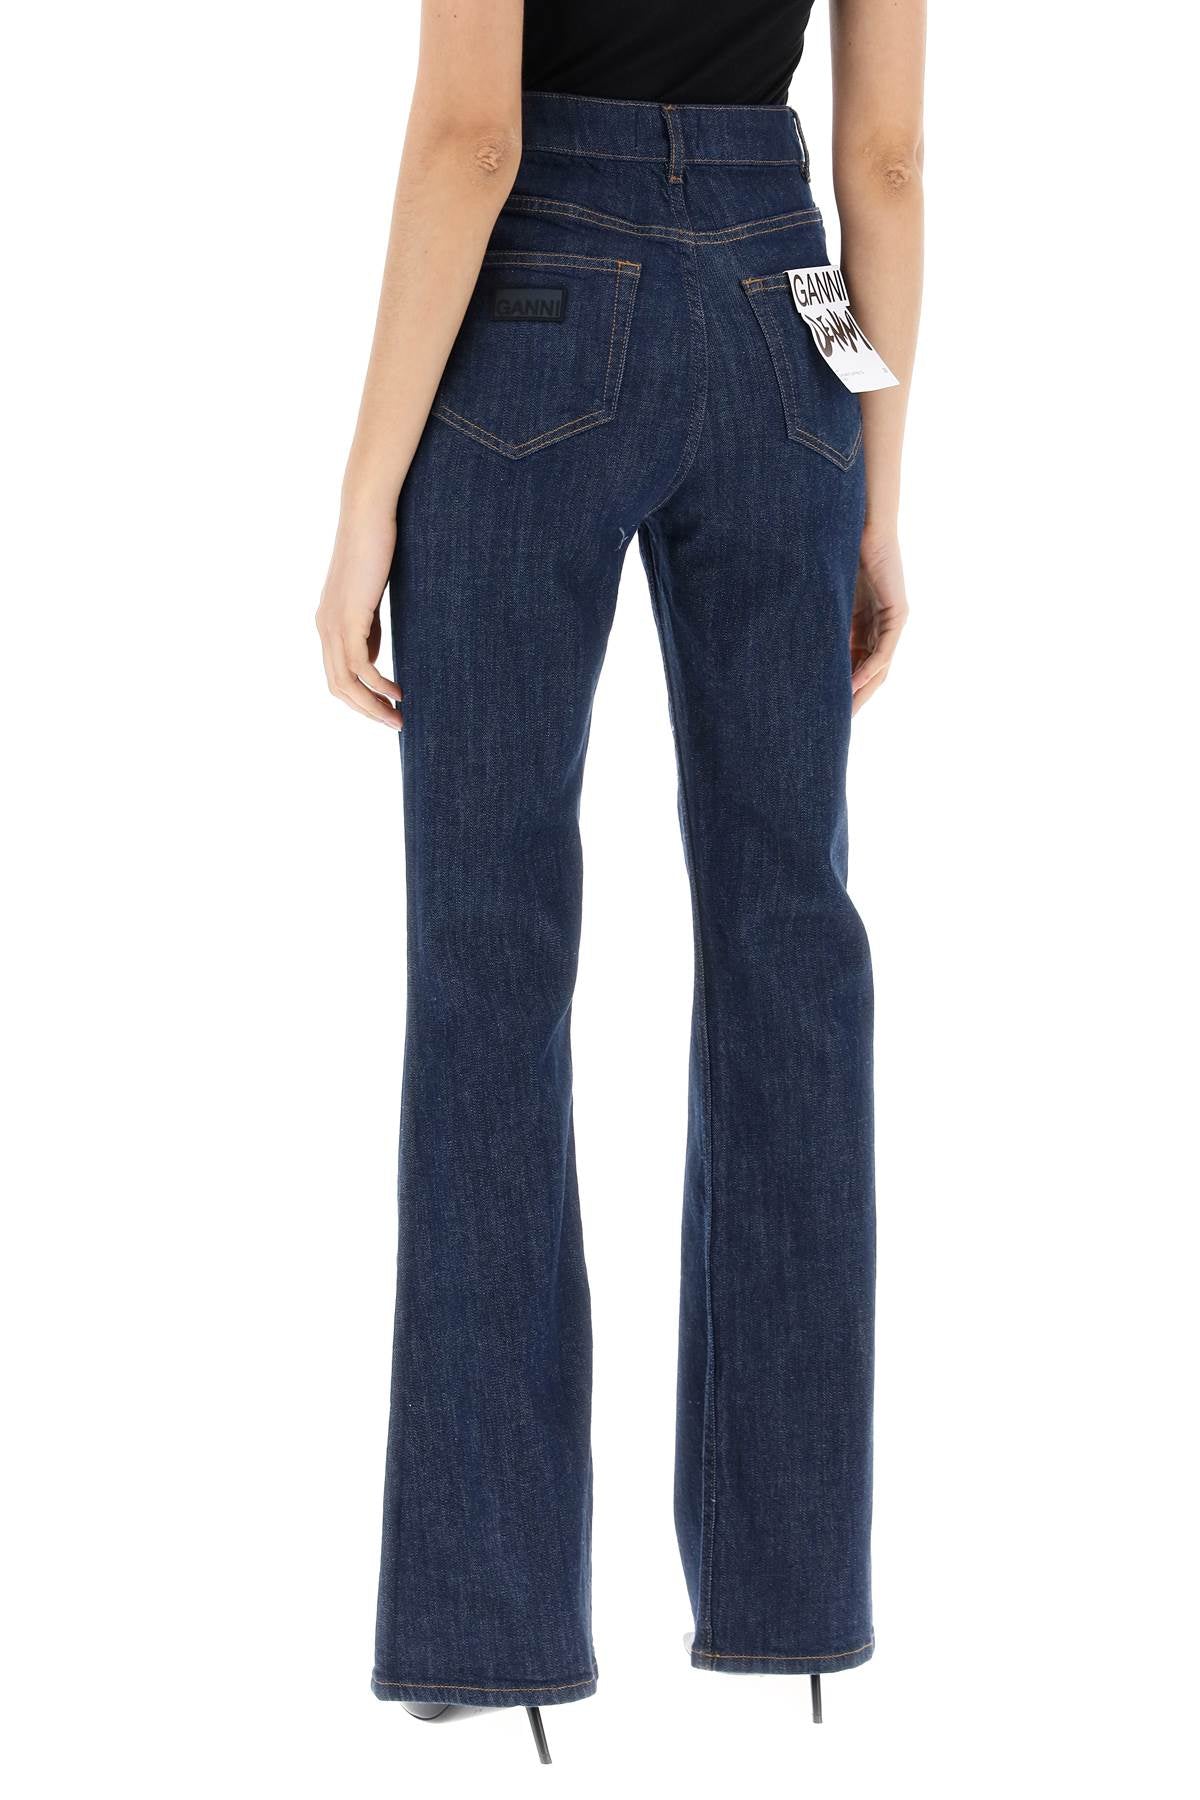 Ganni high-waisted flared jeans-2